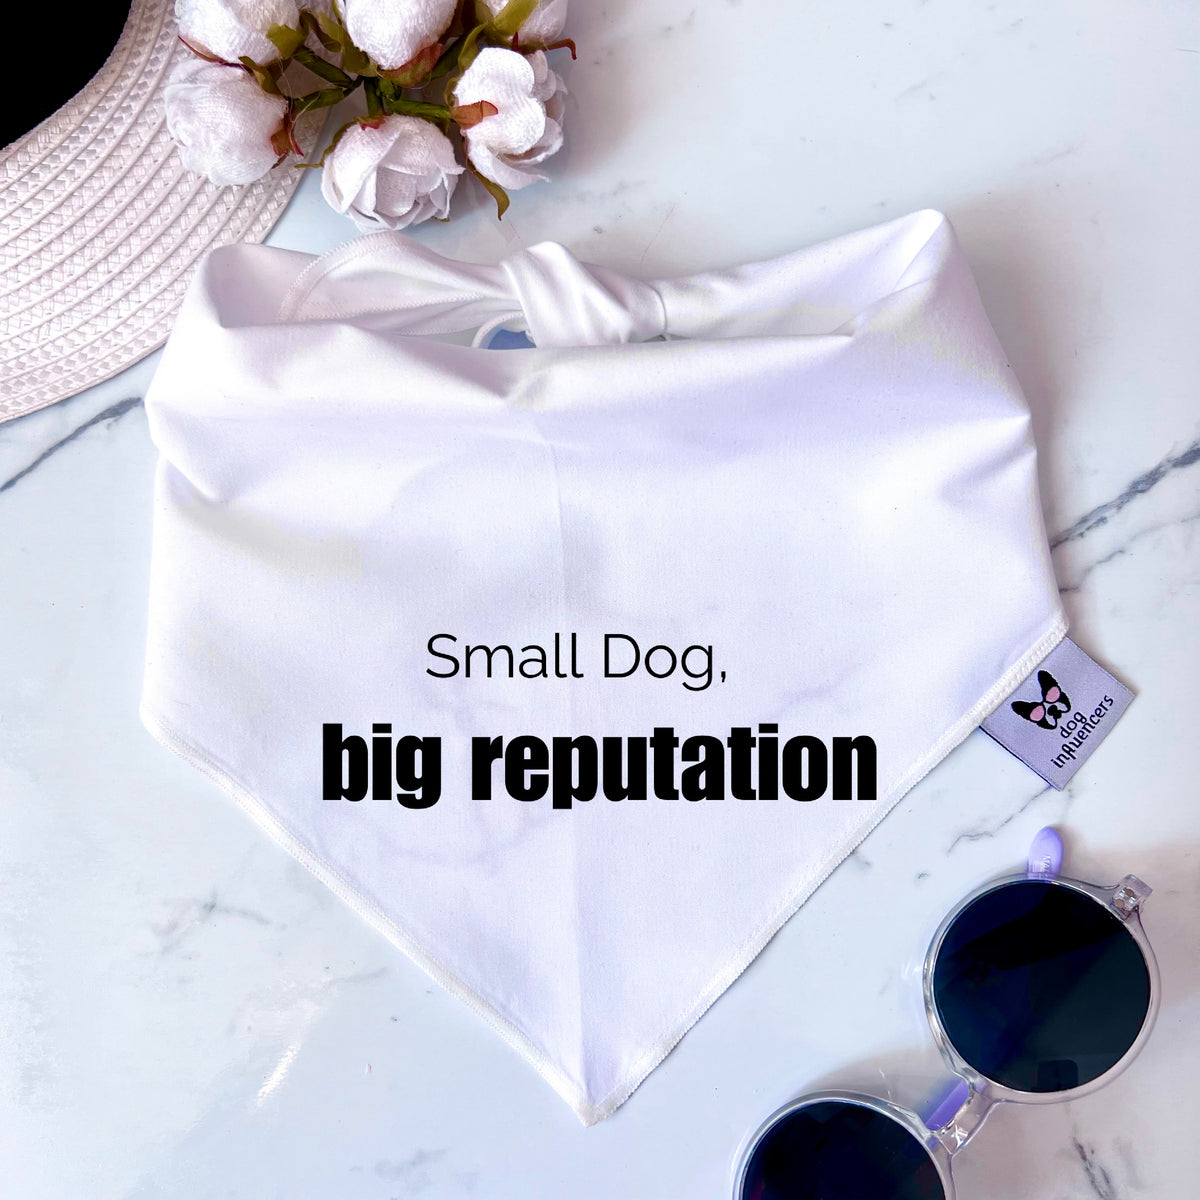 Taylor Swift Dog Bandana - "Small dog, big reputation" - Gift for a Fan Dog Mum